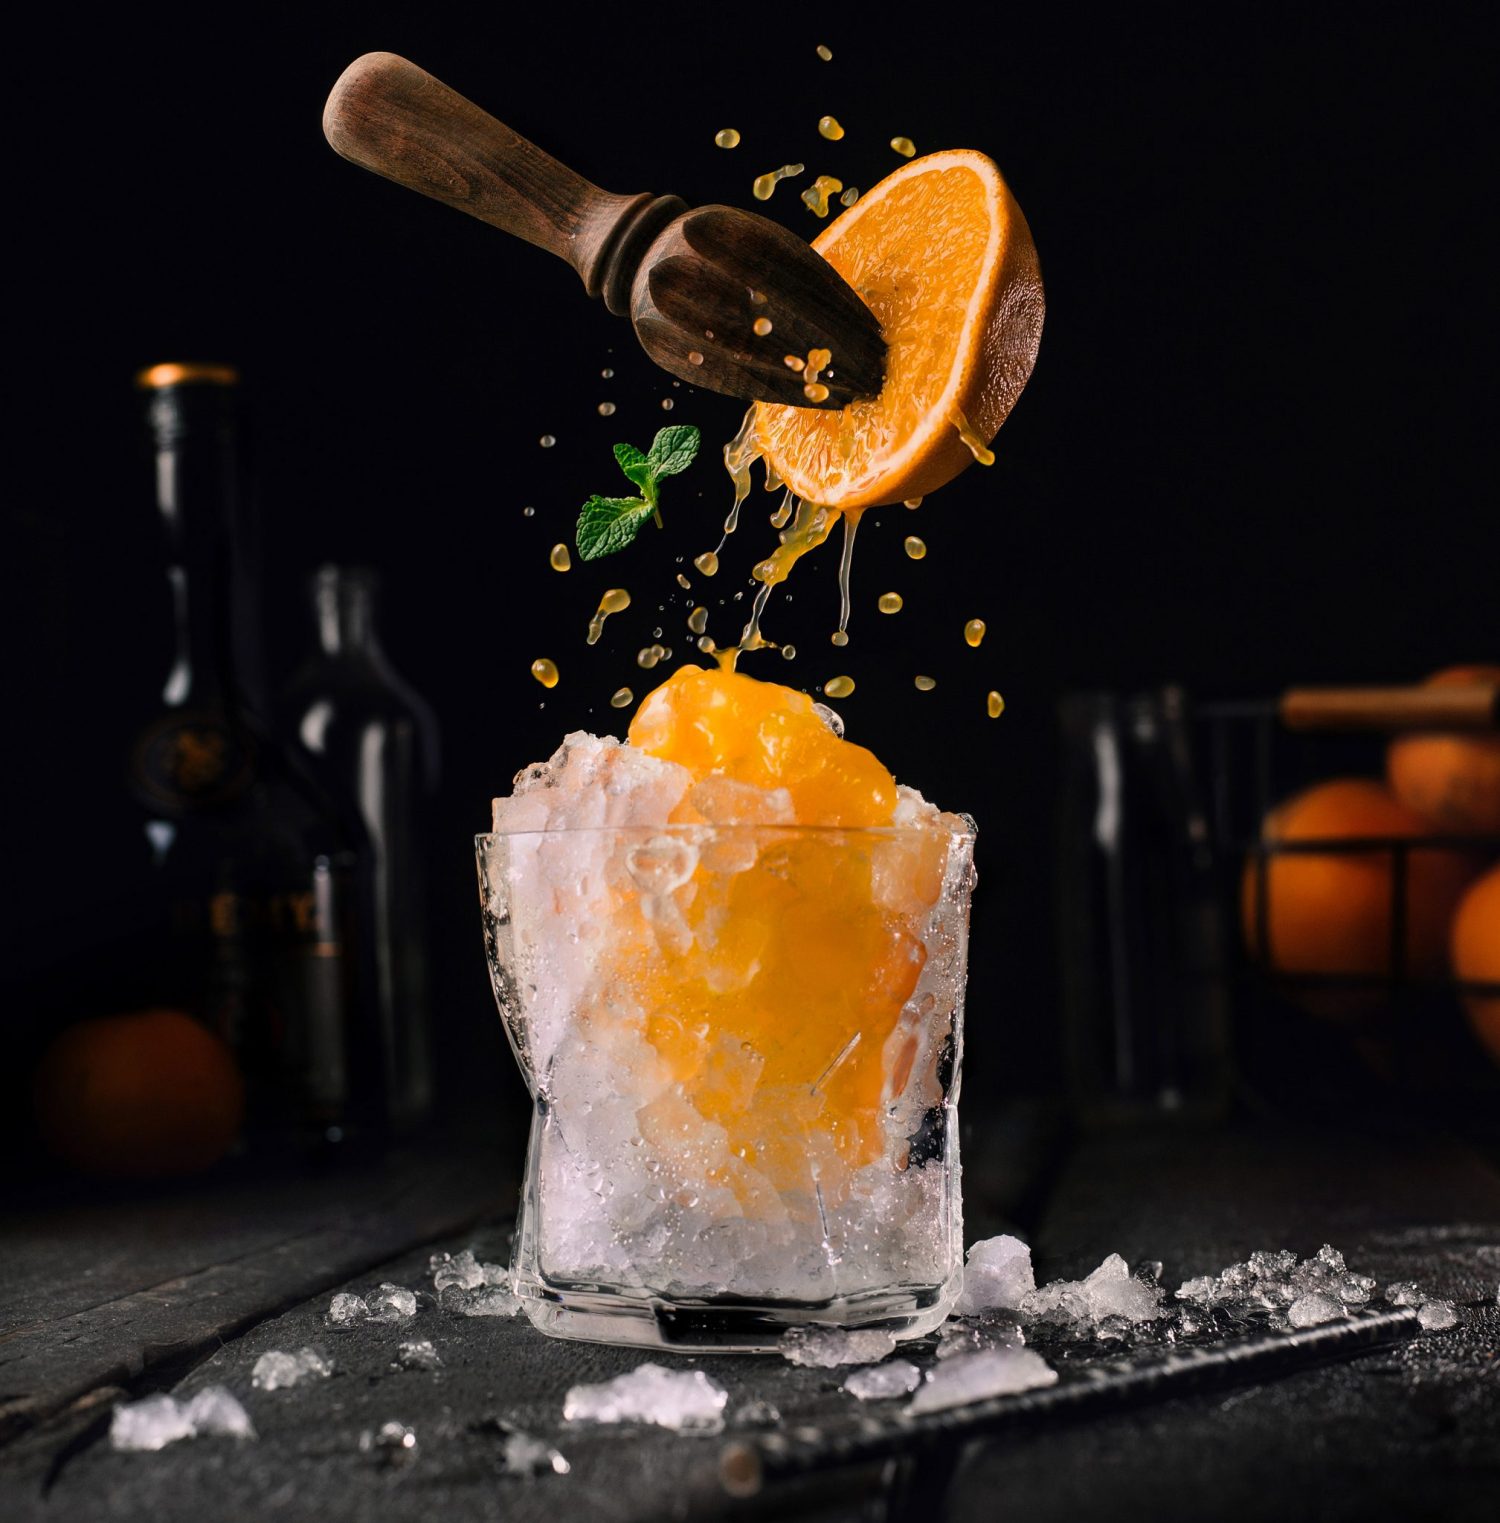 https://ceria-juize.com/upload/2023/06/14-creative-food-photography-ideas-orange-juice-by-pavel-sablya.jpg